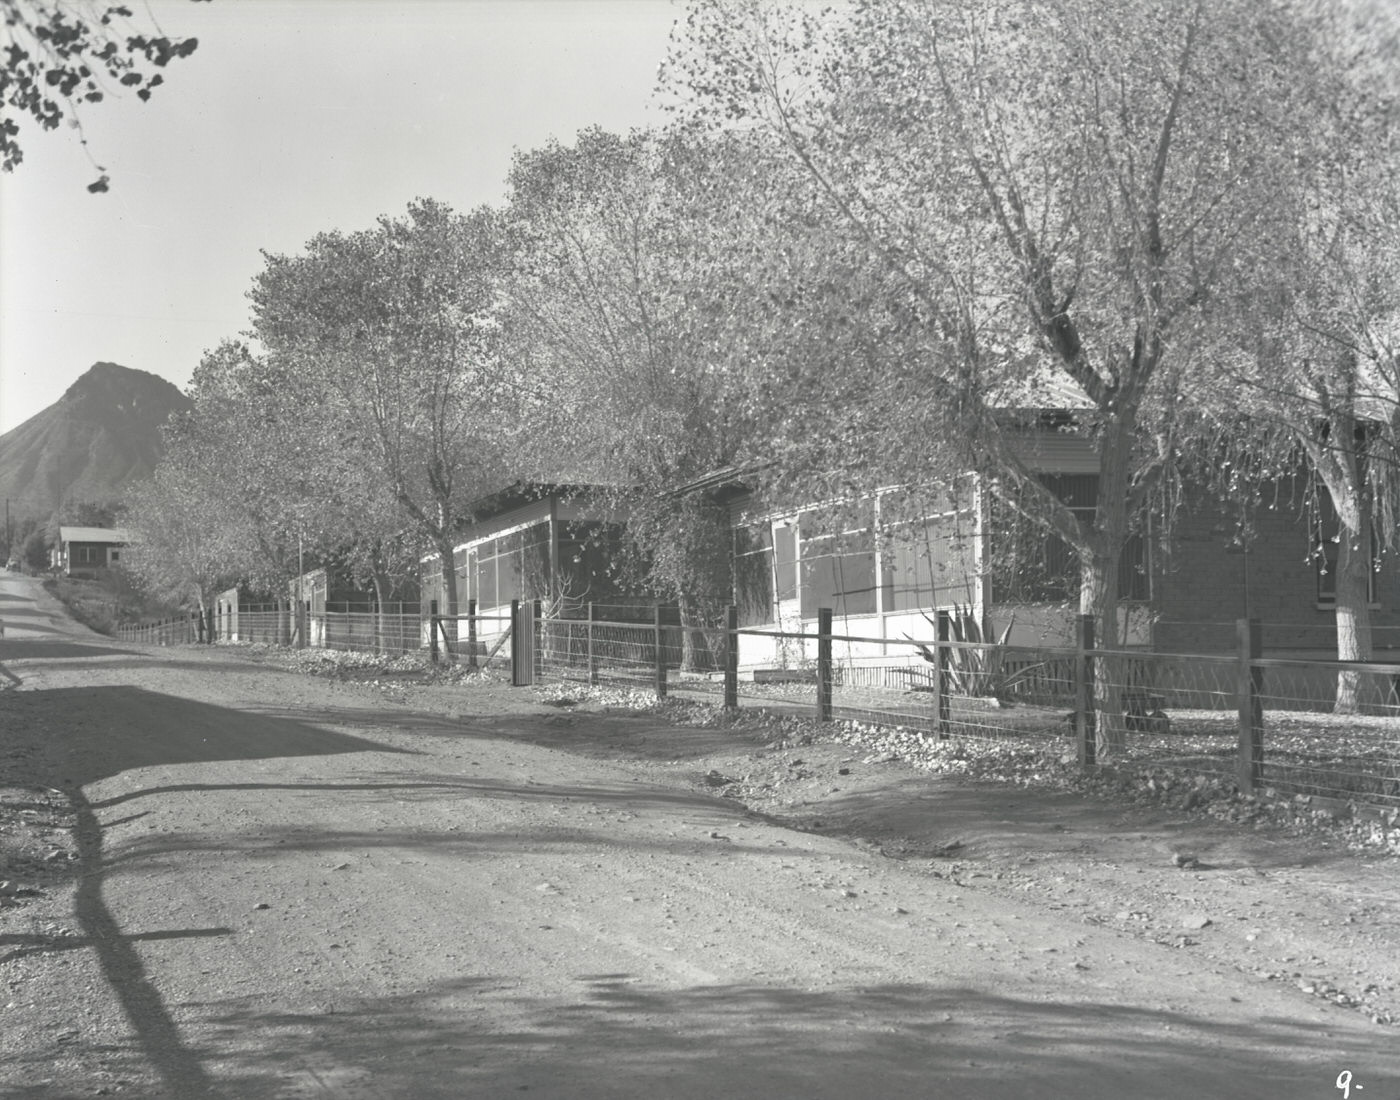 Houses in Ray, Arizona, 1930s